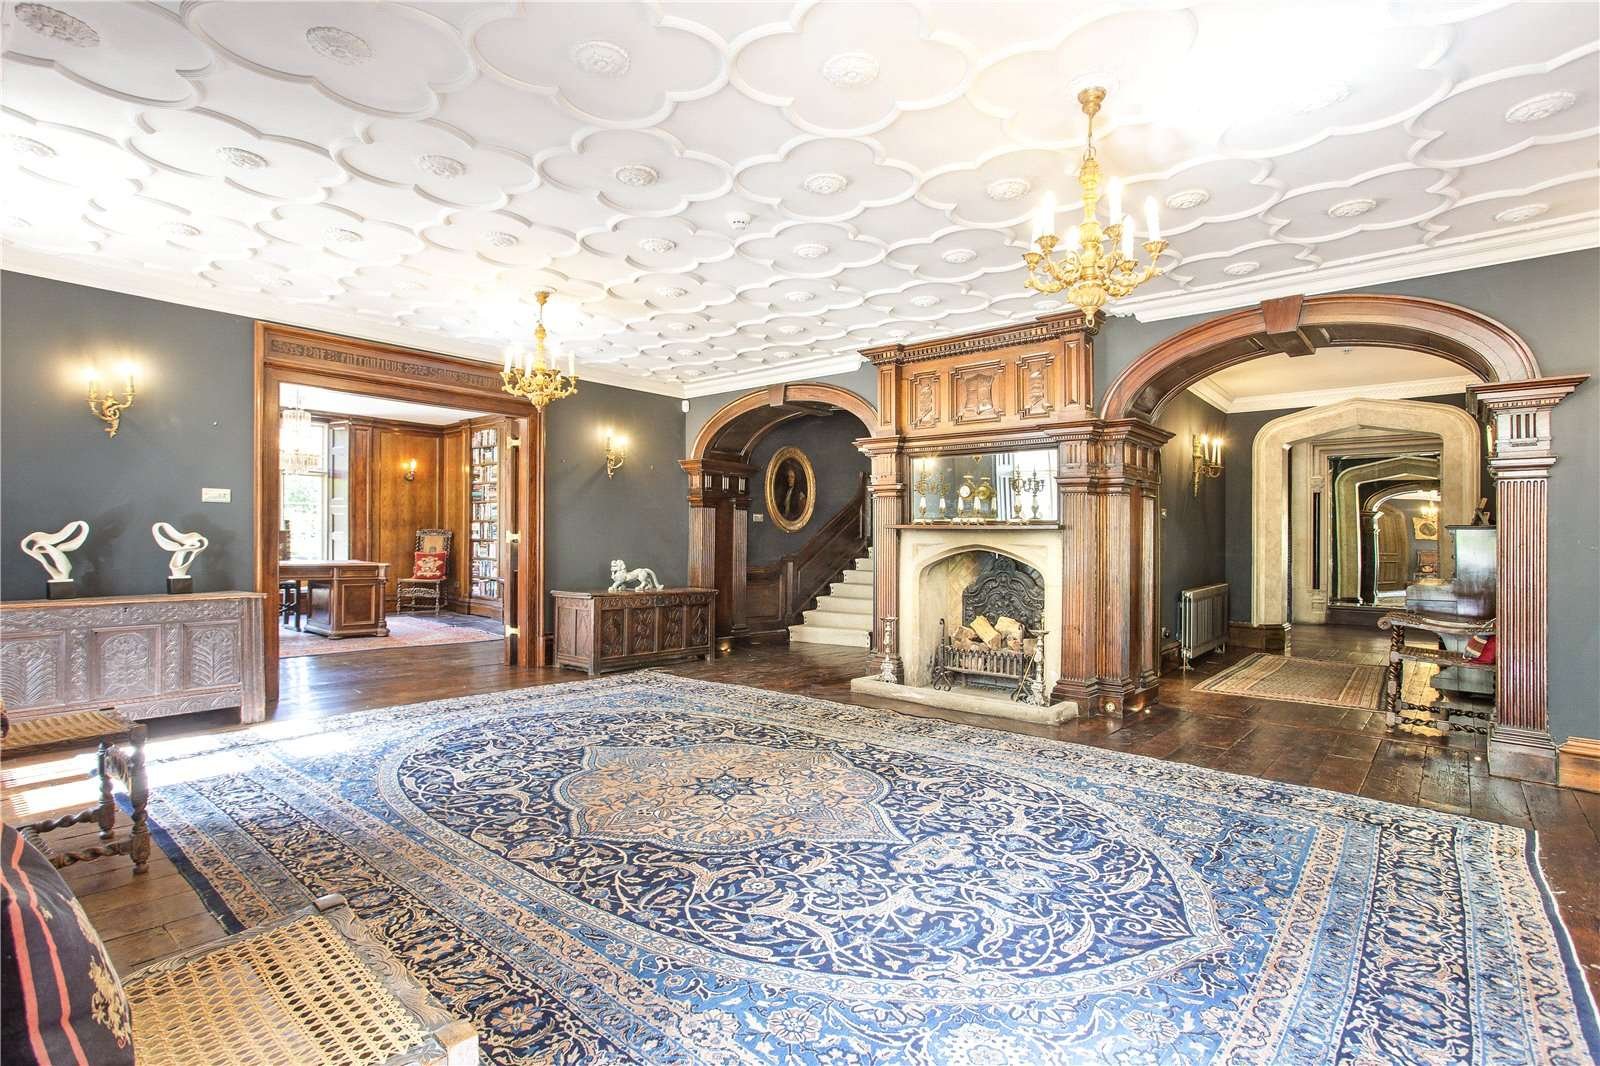 Francis York Stanley House Luxury Rental Property Available Through Savills 00001.jpg